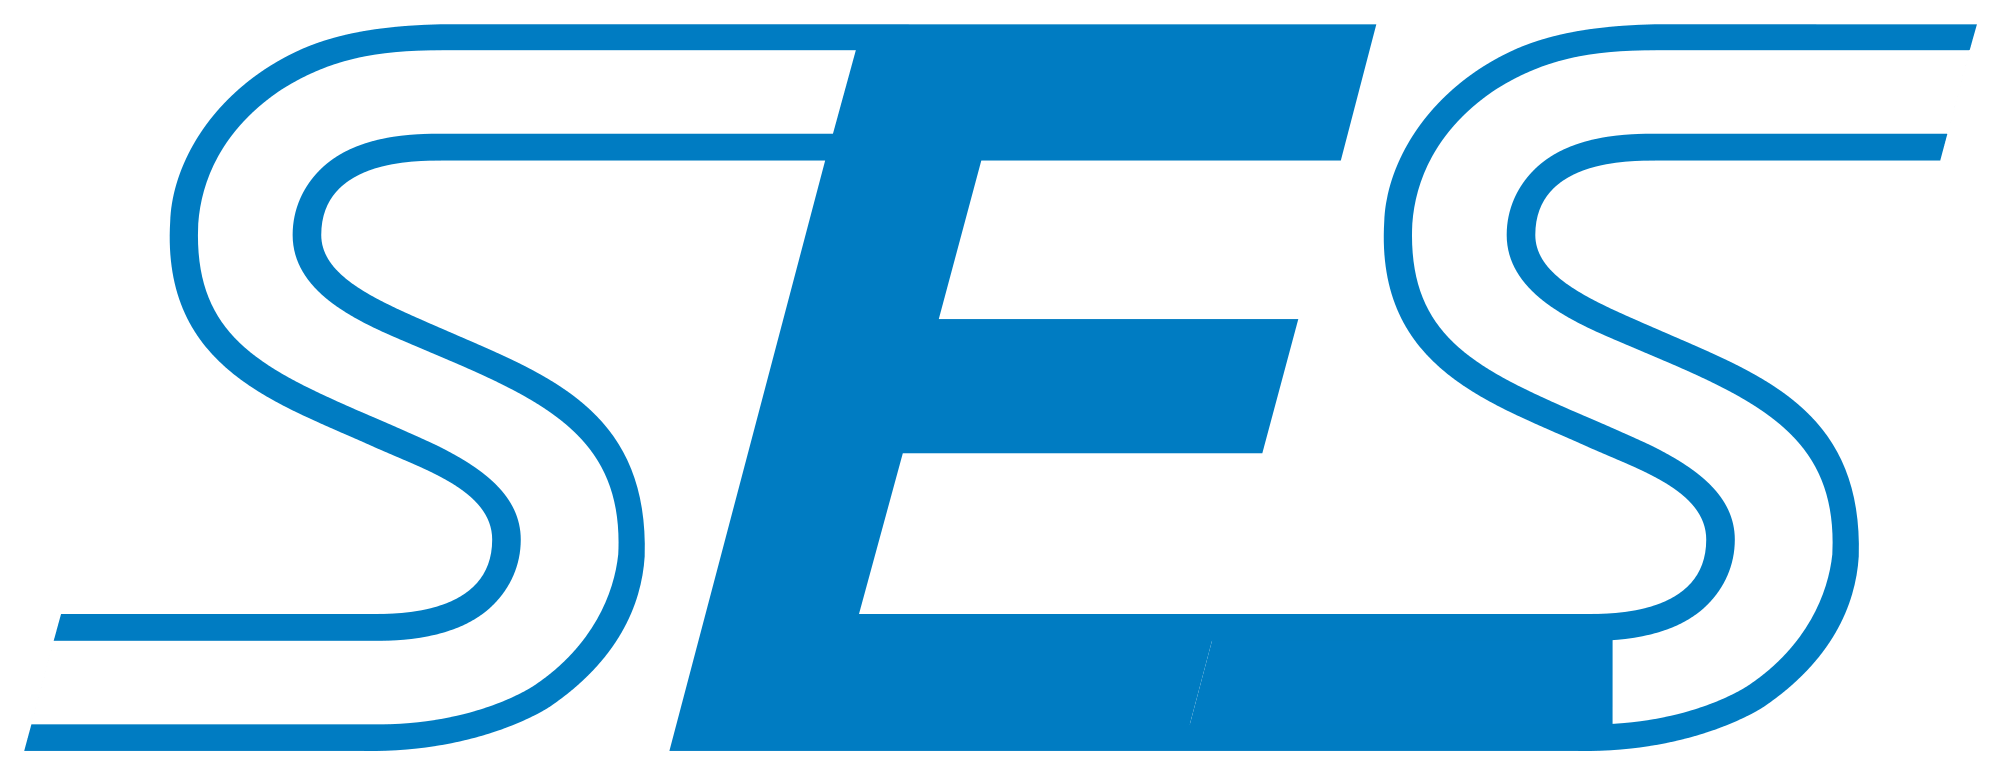 Ses Logo - Logo SES.svg